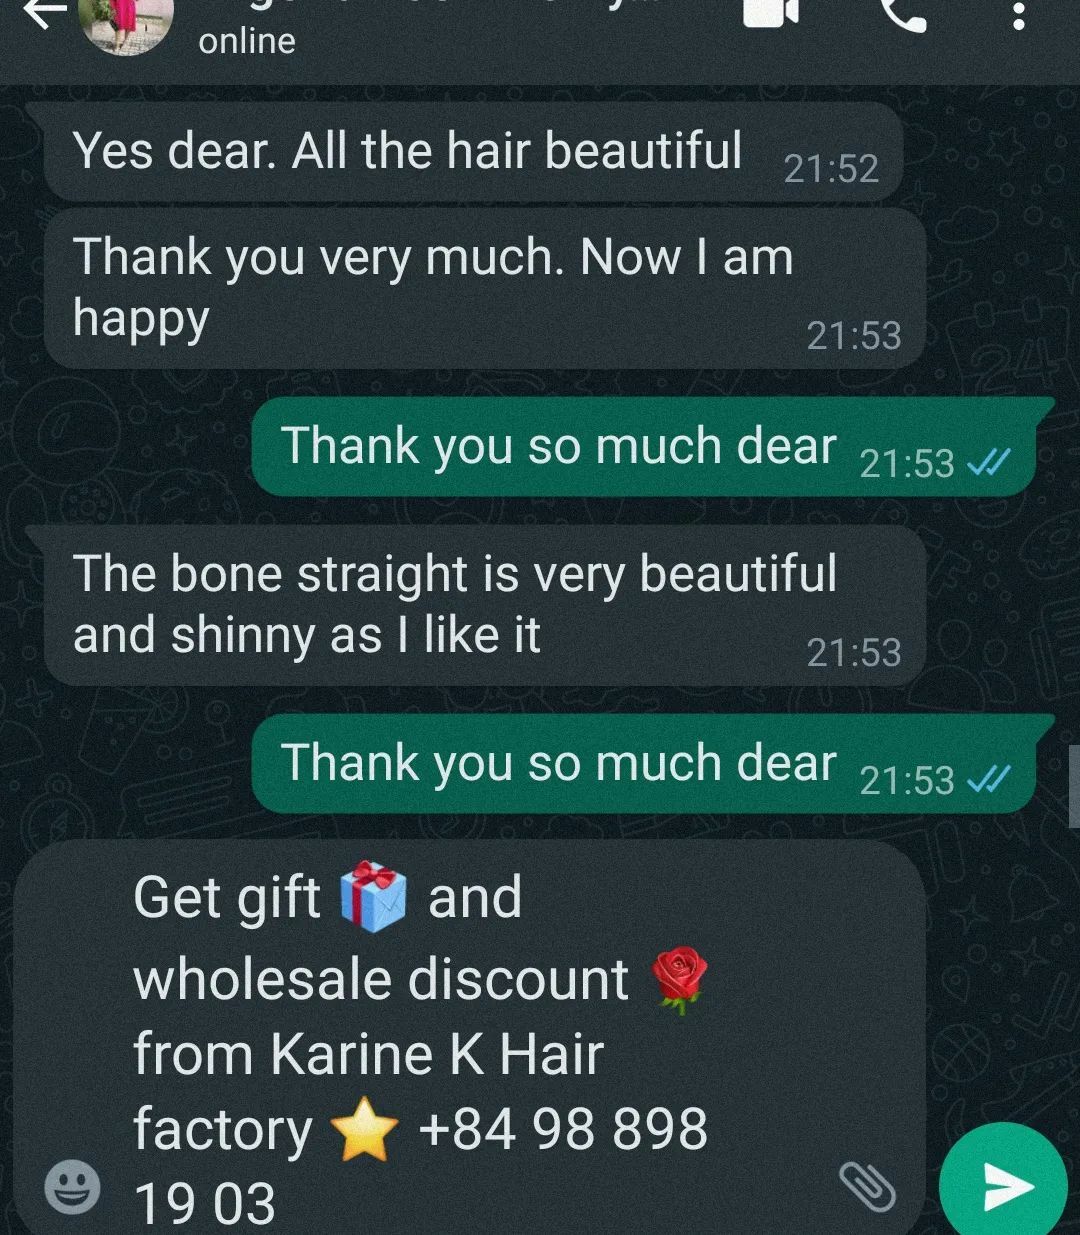 K-Hair review